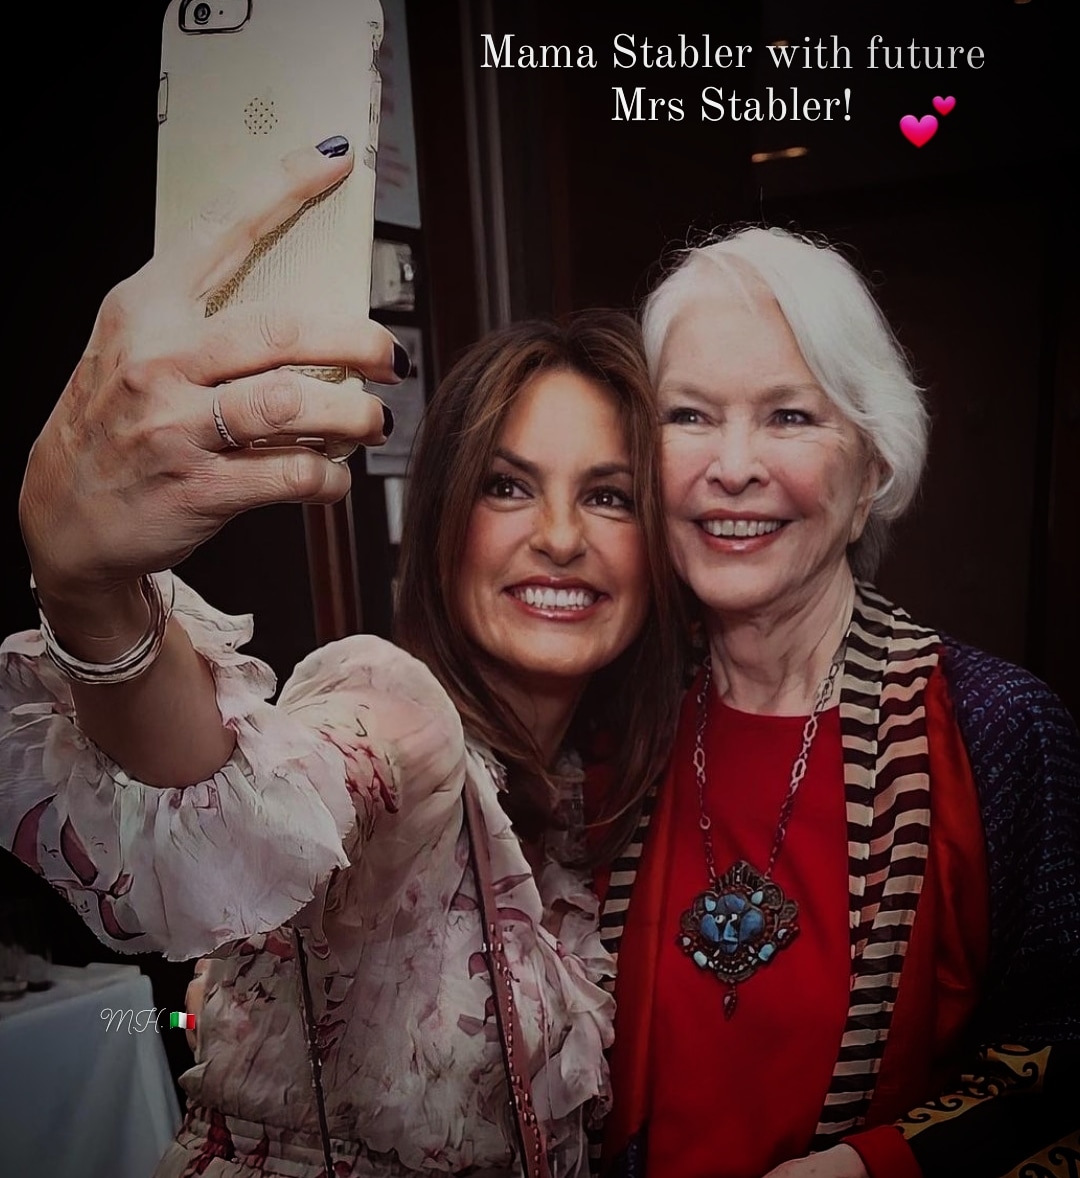 Mama Stabler with future Mrs Stabler!😍
💖💛💙❤🧡💜💚
Two beauties!...I love that episode so much......😍...and this pic is amazing!😍
#EOISENDGAME 
#Chriska #Bensler #LivandEl #PartnersForLife #EO #MariskaHargitay #BernadetteStabler #EllenBurstyn